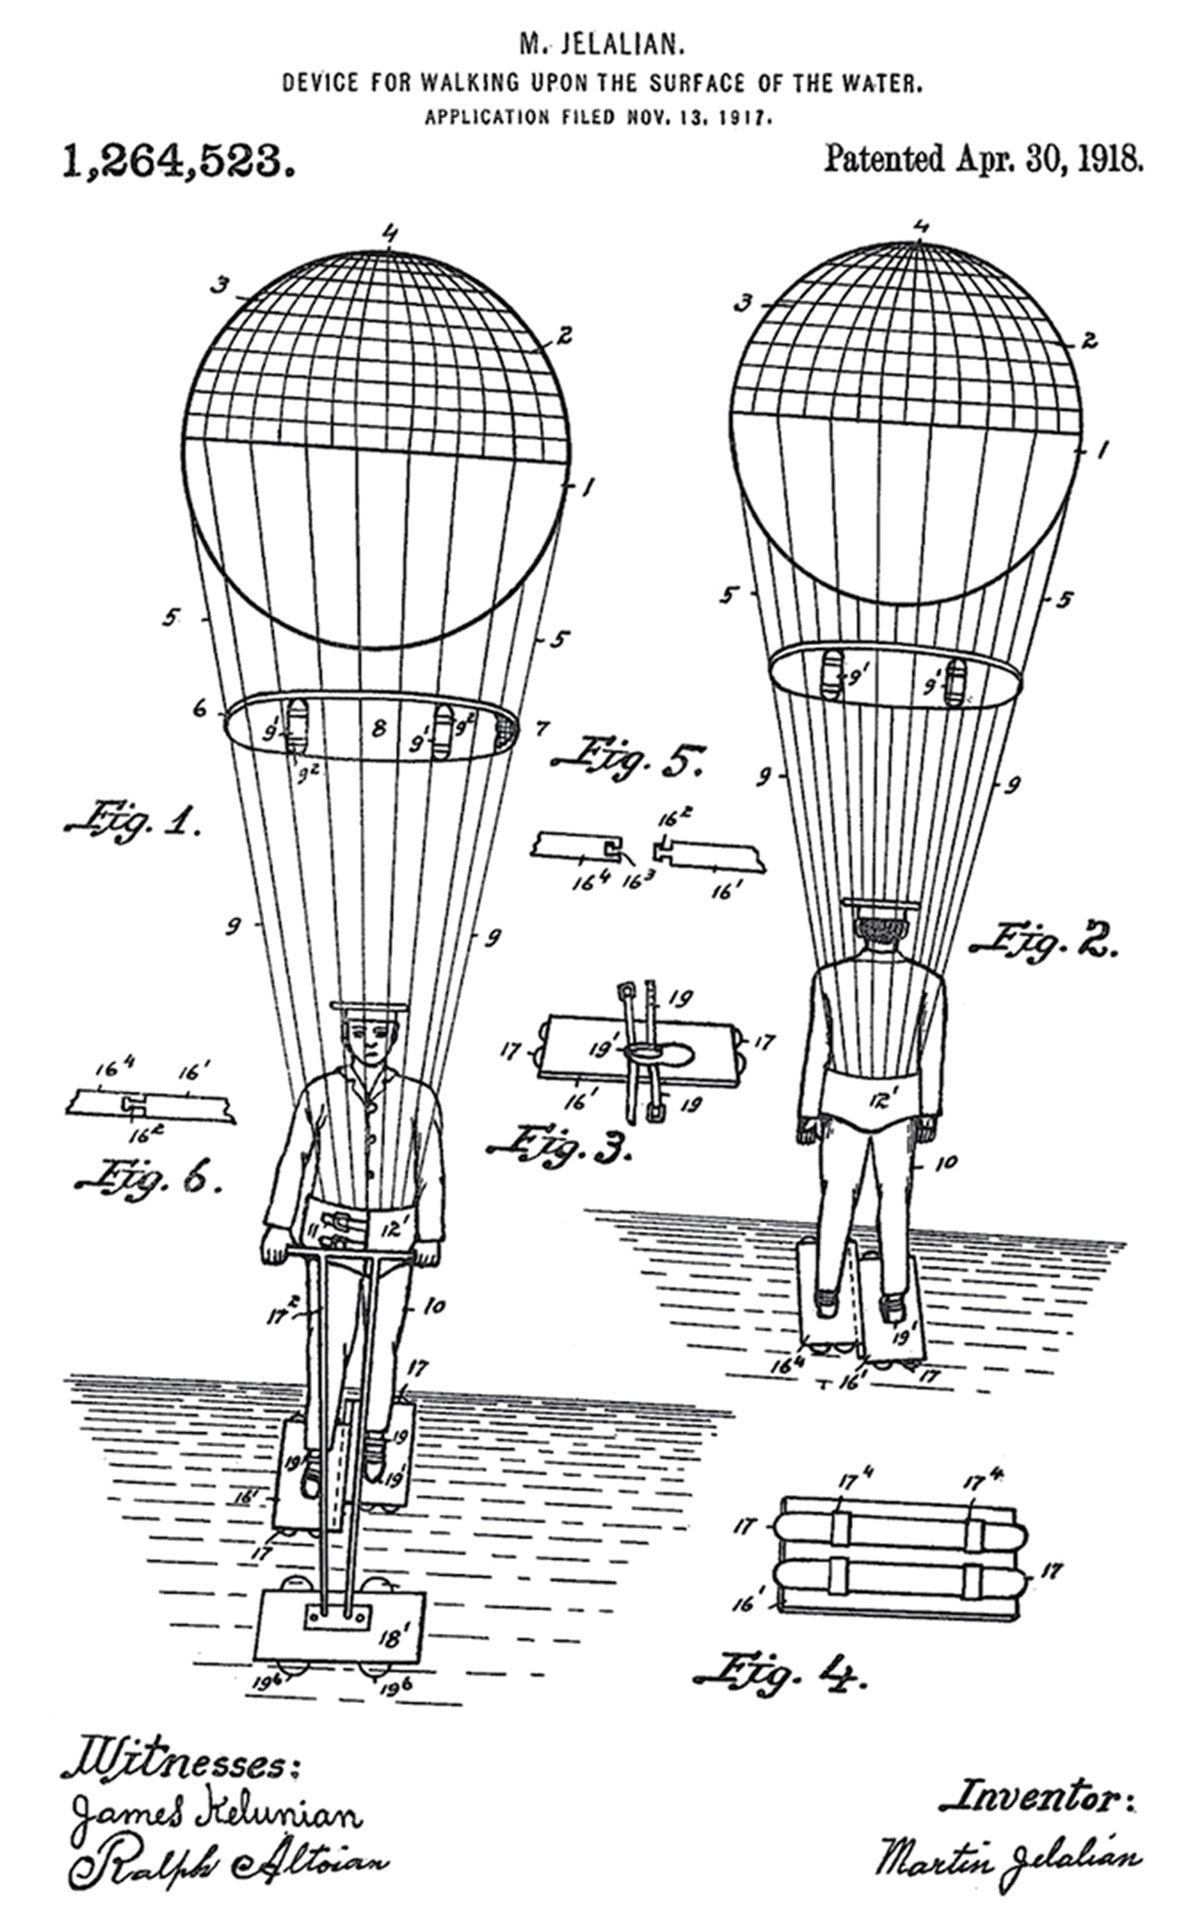 An illustration of Martin Jelian's water-walking invention.